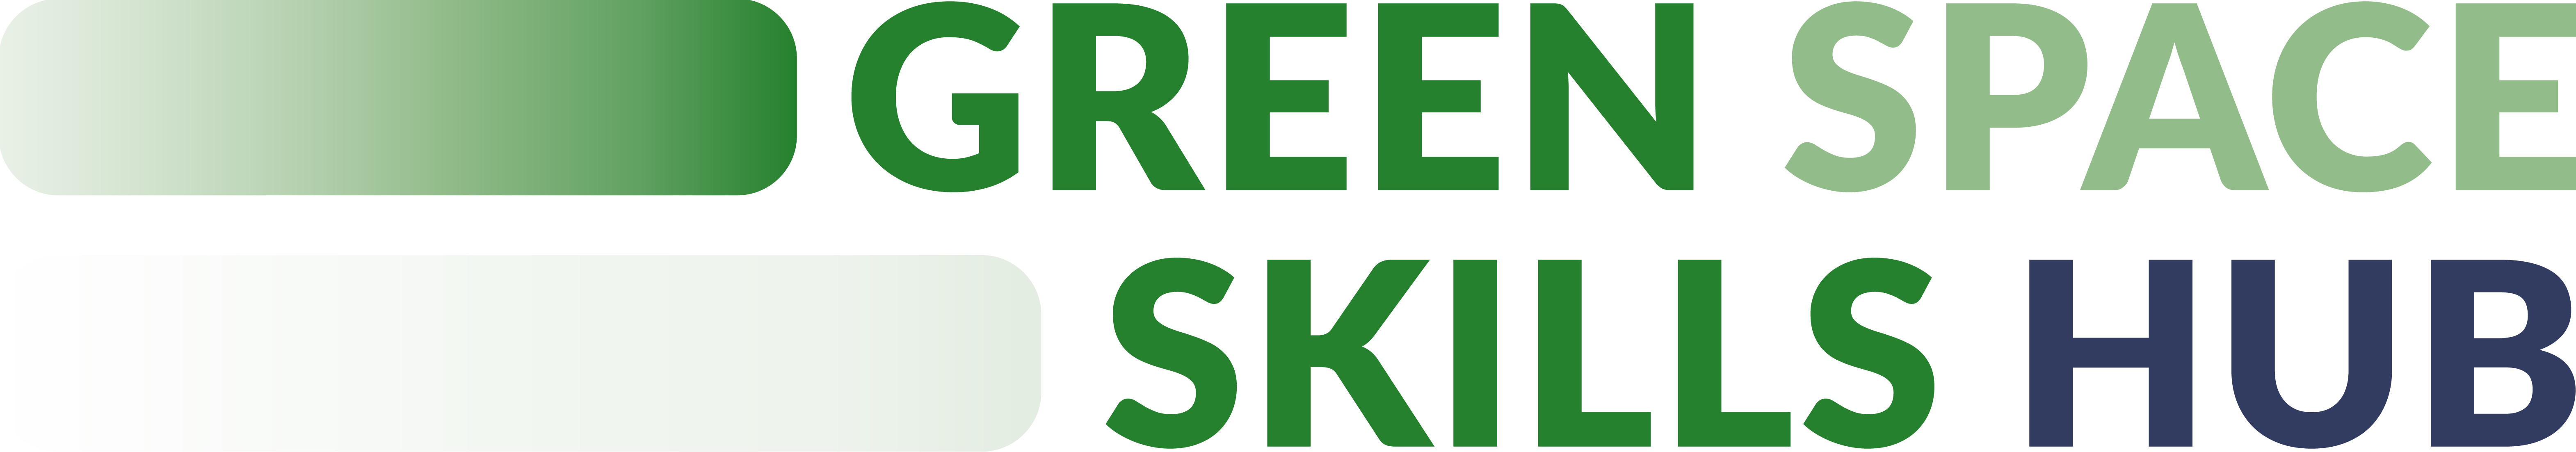 Green Space Skills HUB Logo